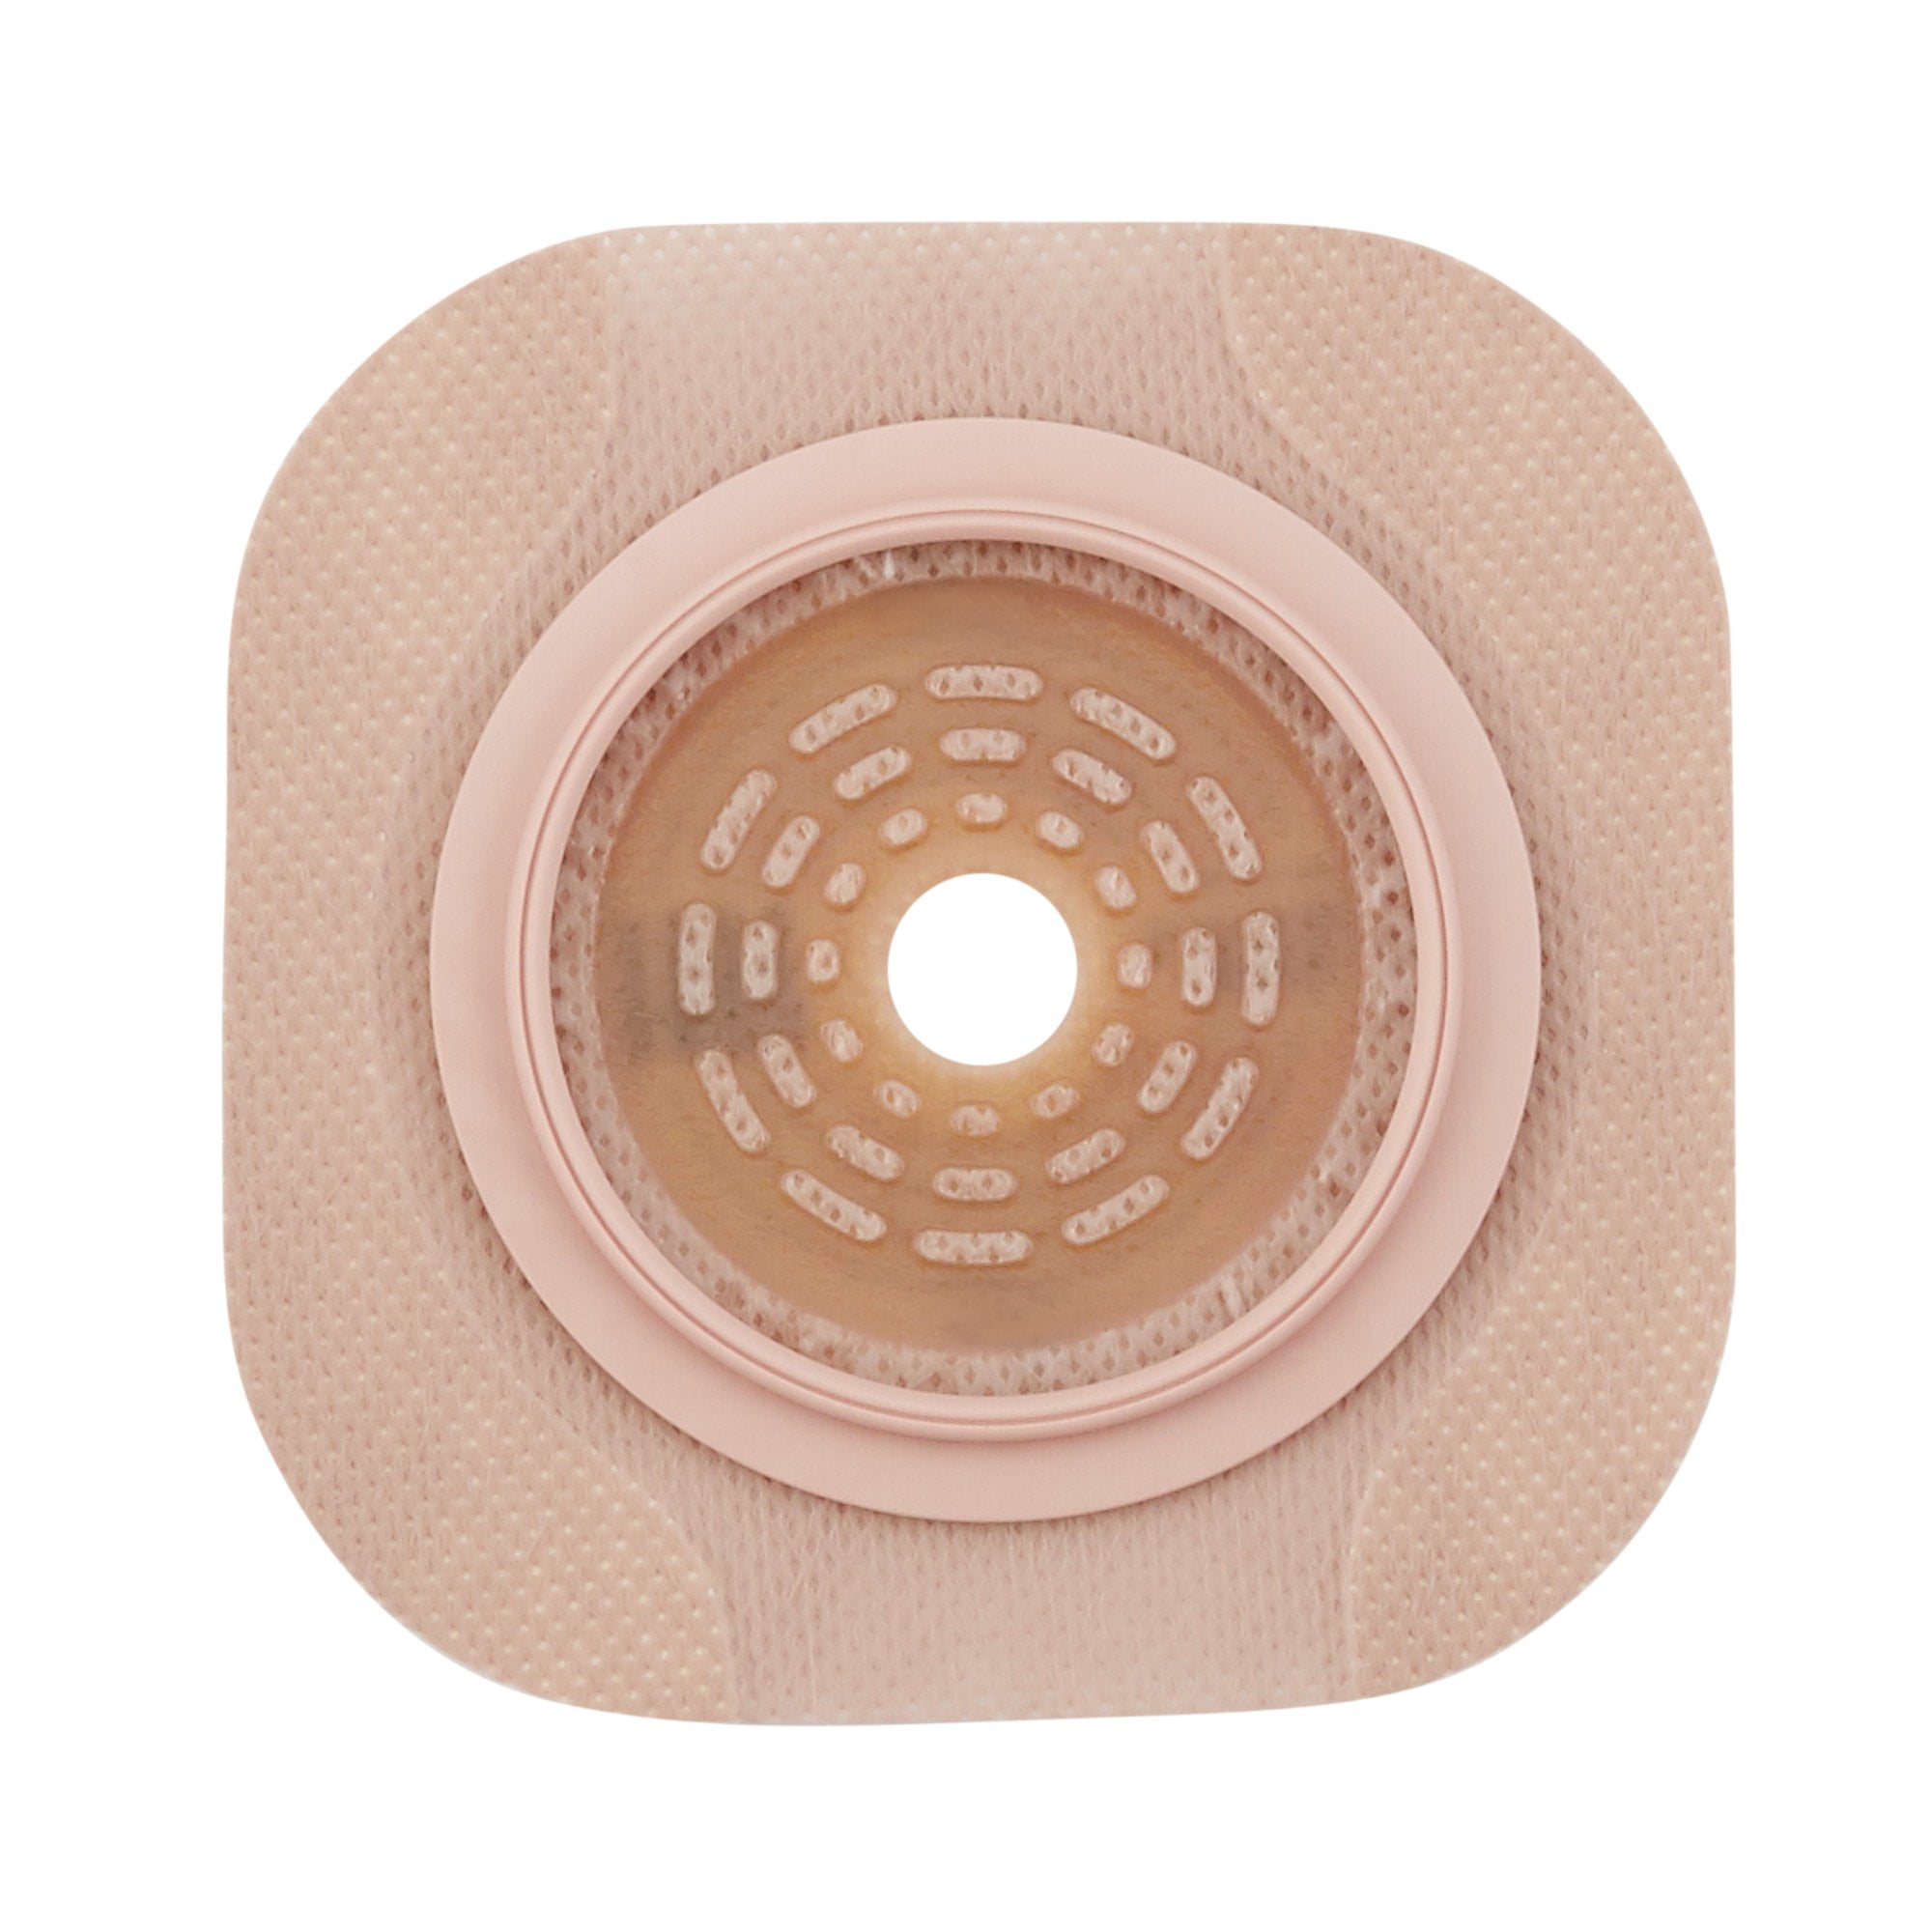 Histocryl Flex Skin Adhesive – Integrated MedCraft